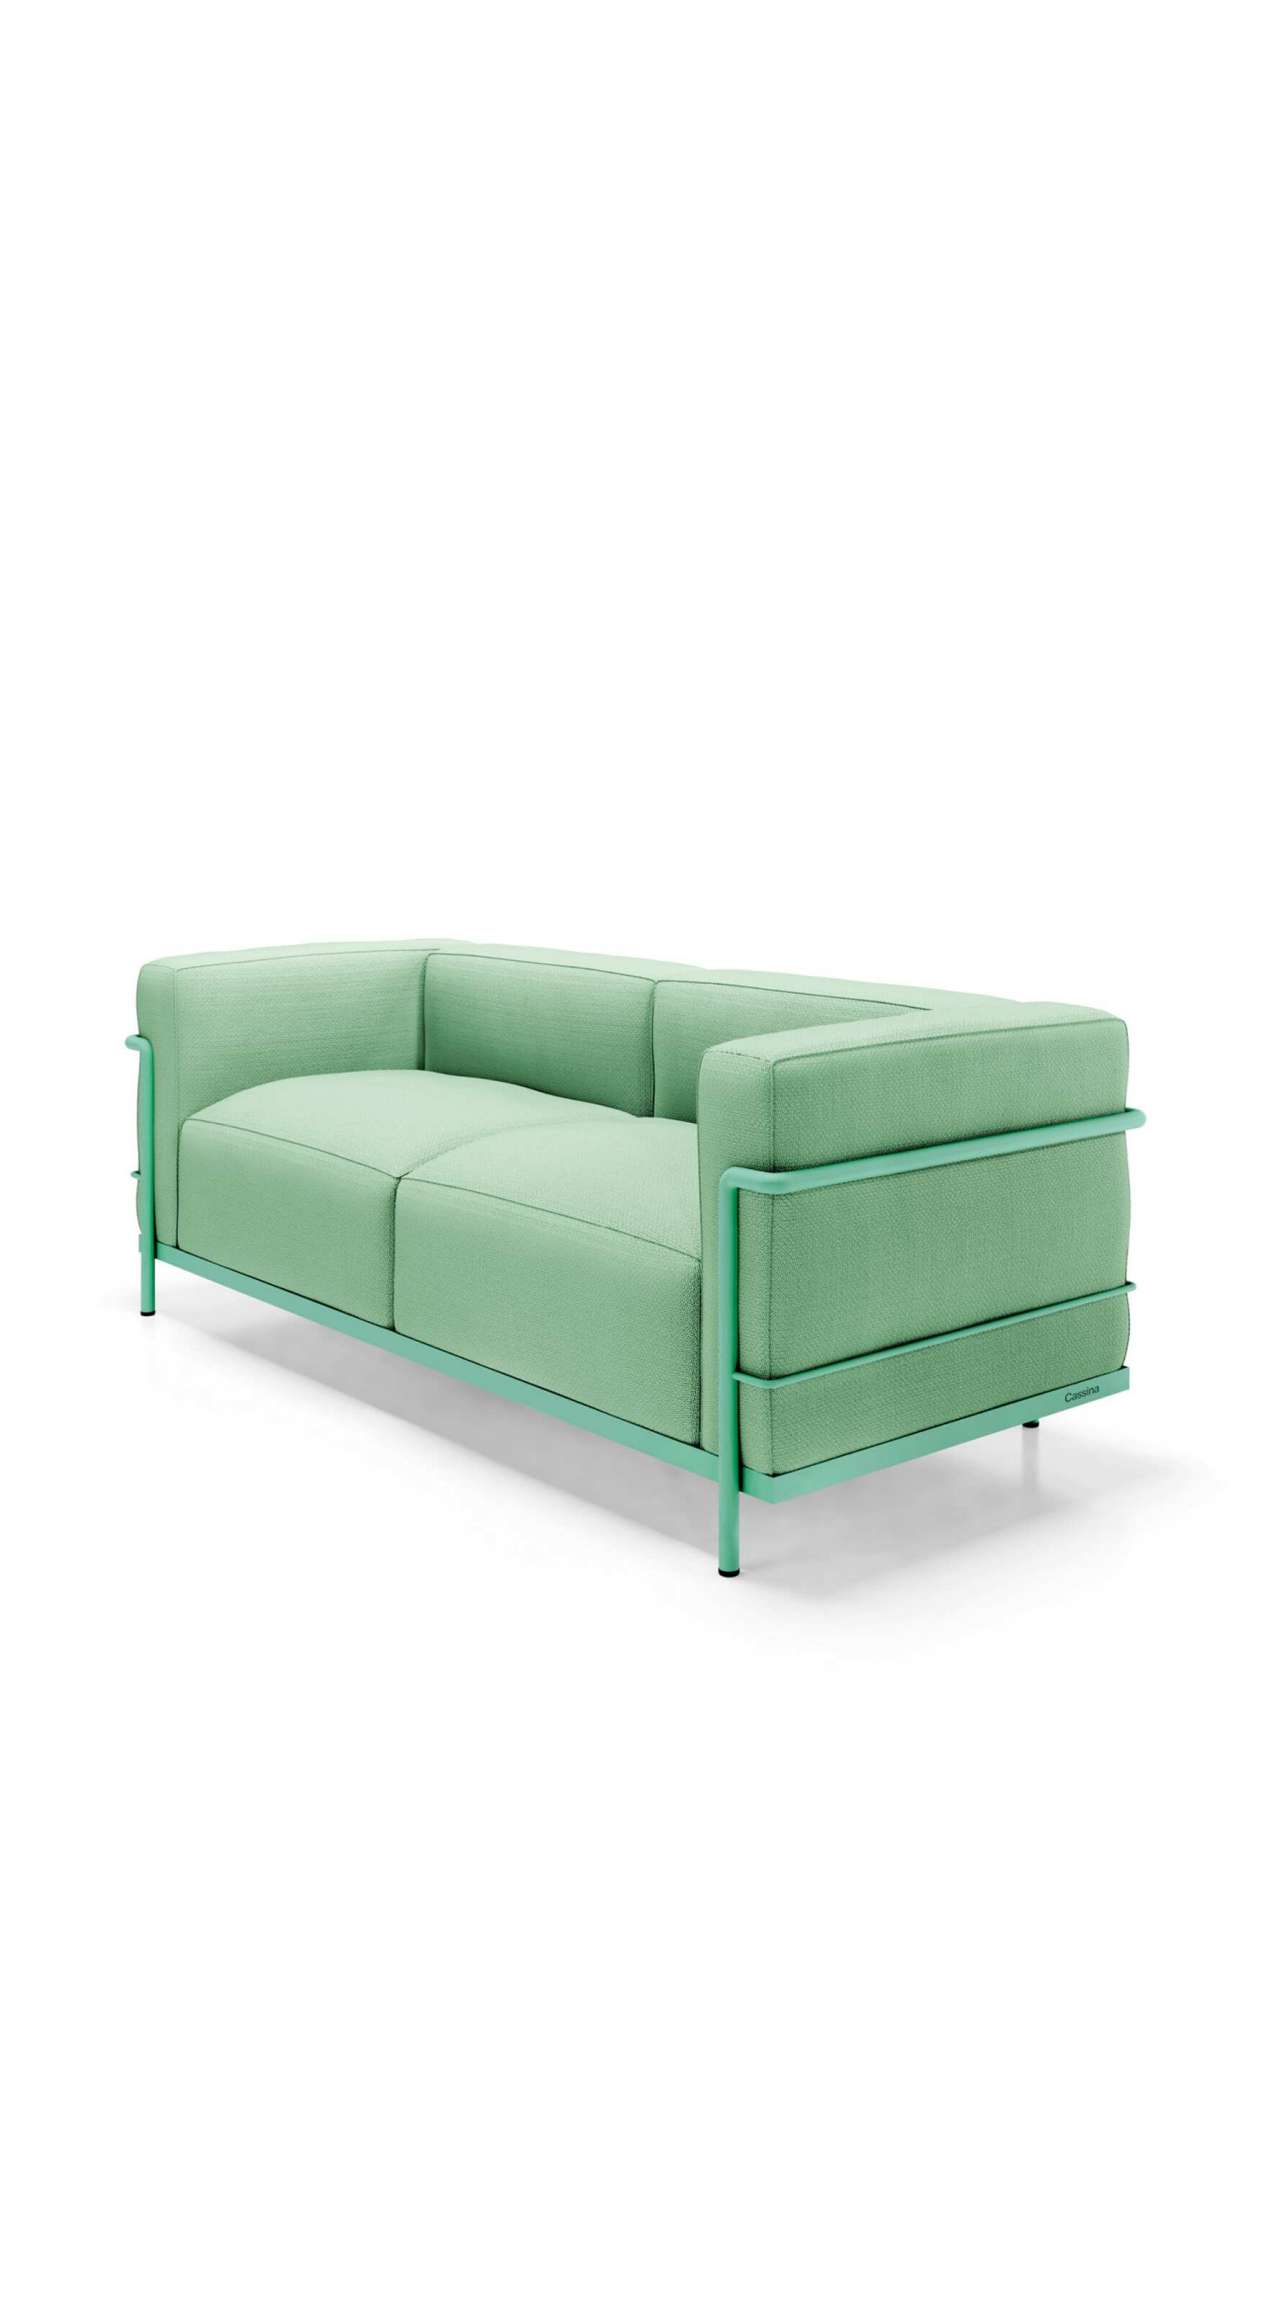 3 SOFA - Pro Sofa by Le Corbusier, Pierre Jeanneret, Charlotte Perriand |  Cassina